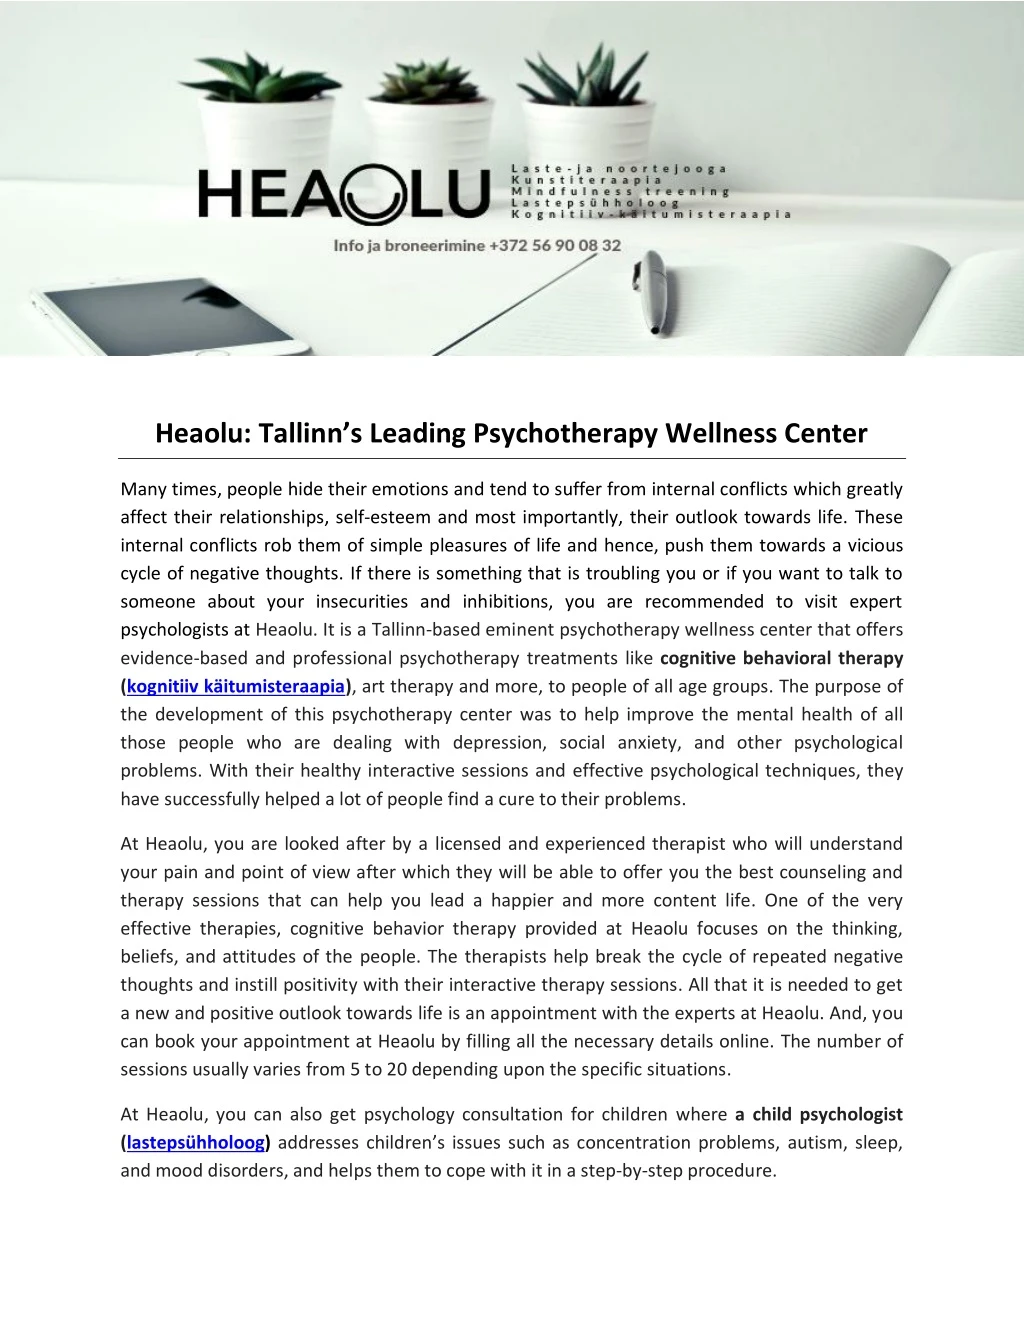 heaolu tallinn s leading psychotherapy wellness